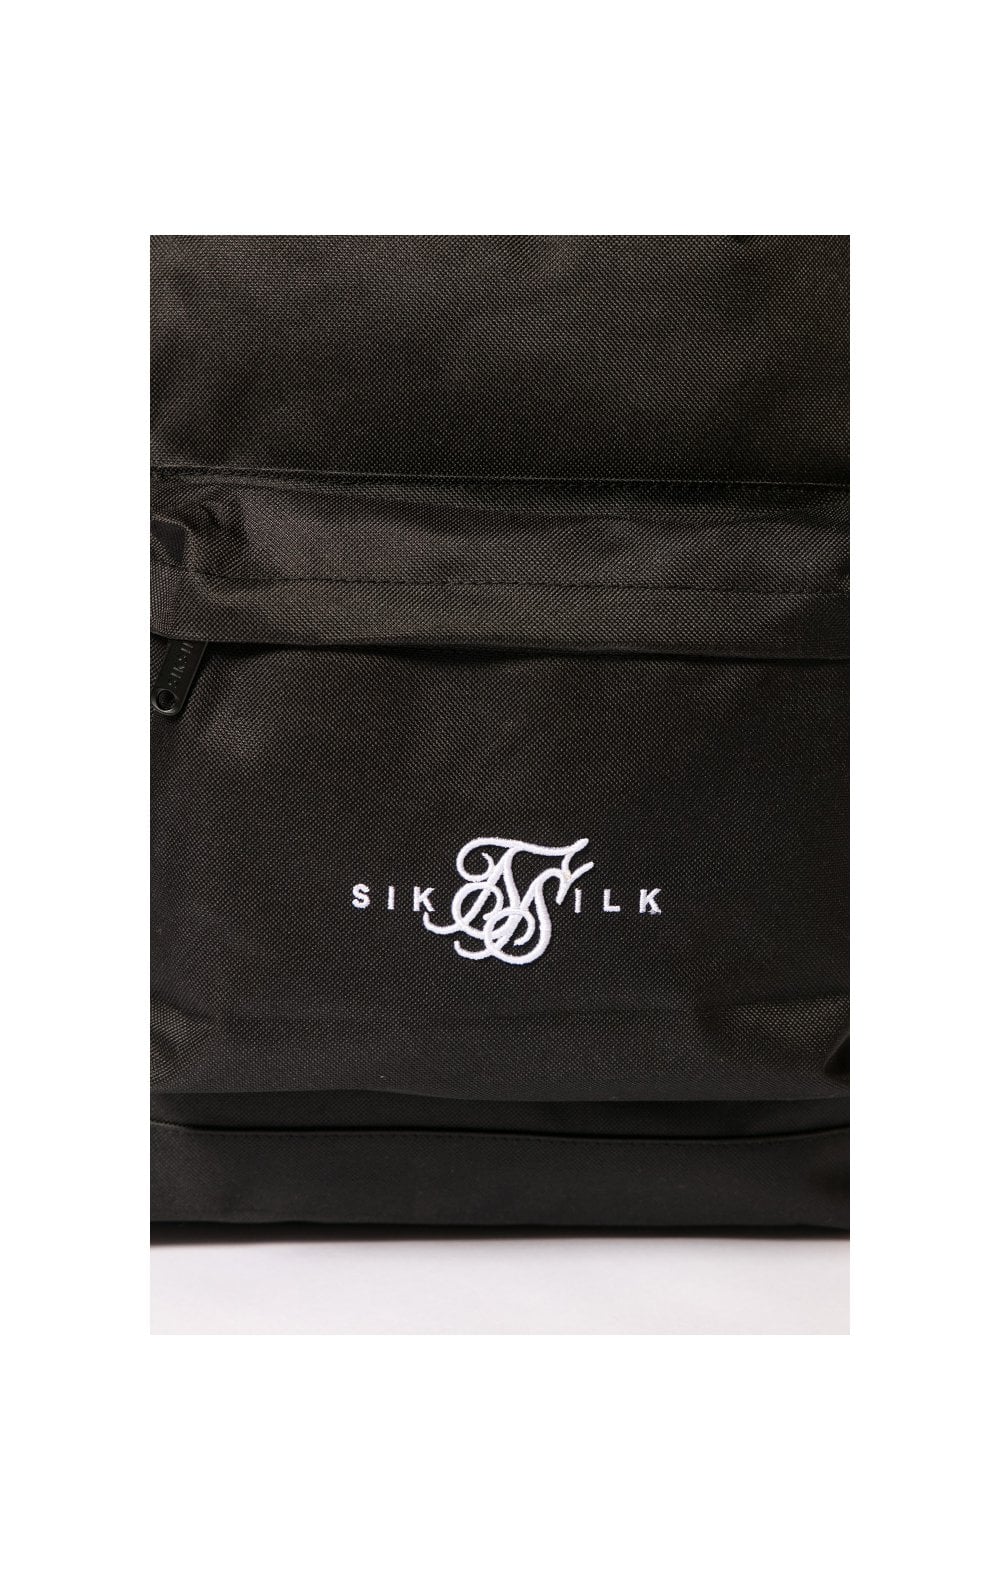 SikSilk Dual Logo Backpack - Black & White (3)